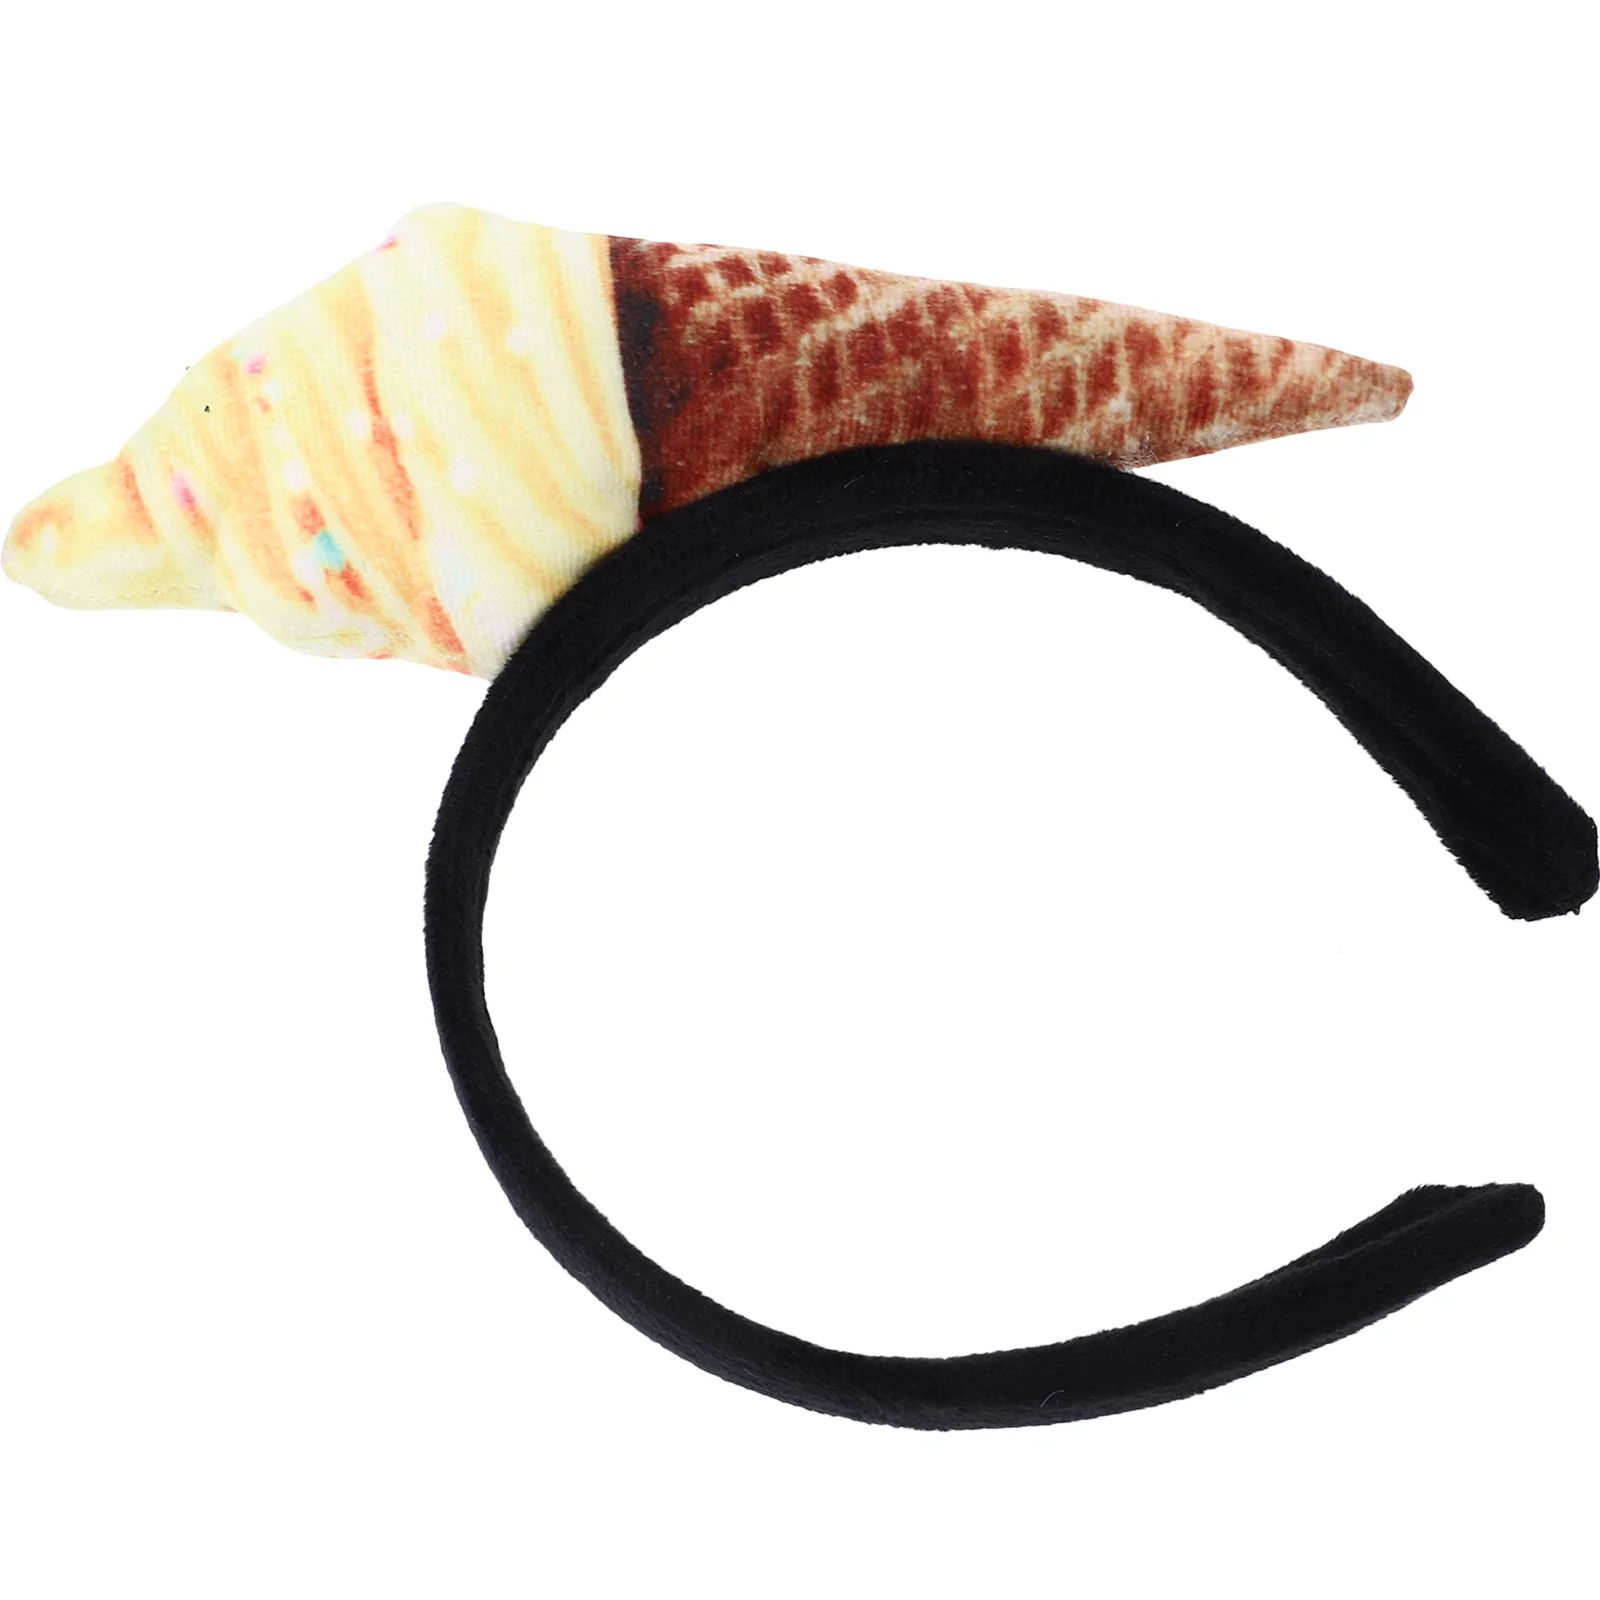 

Ice Cream Hairband Hair Accessory For Adult Children Ice Cream Cone Shape Decoration